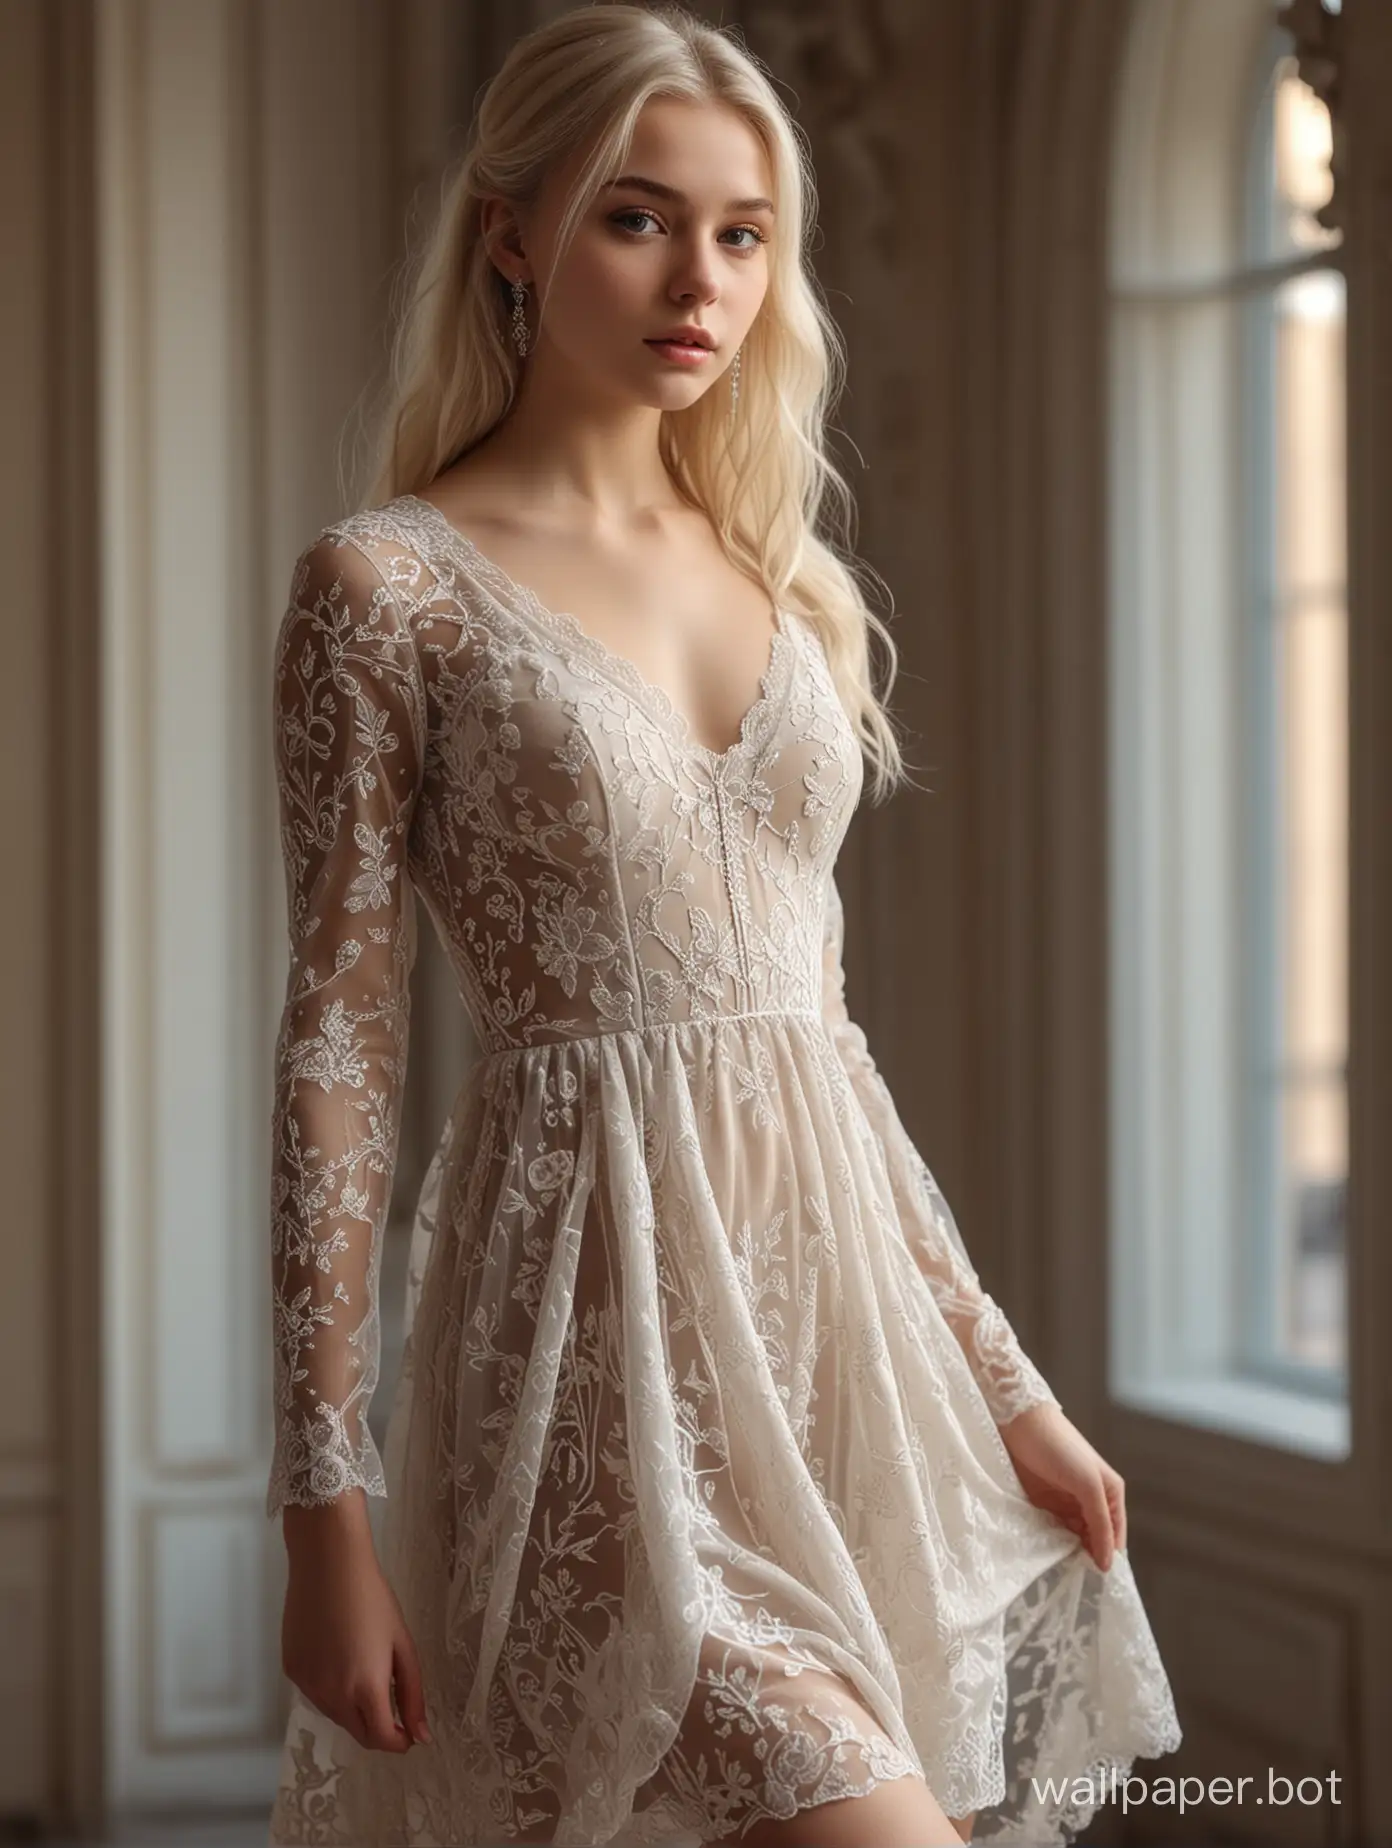 Stunning-18YearOld-Russian-Model-in-Baroque-Sheer-Dress